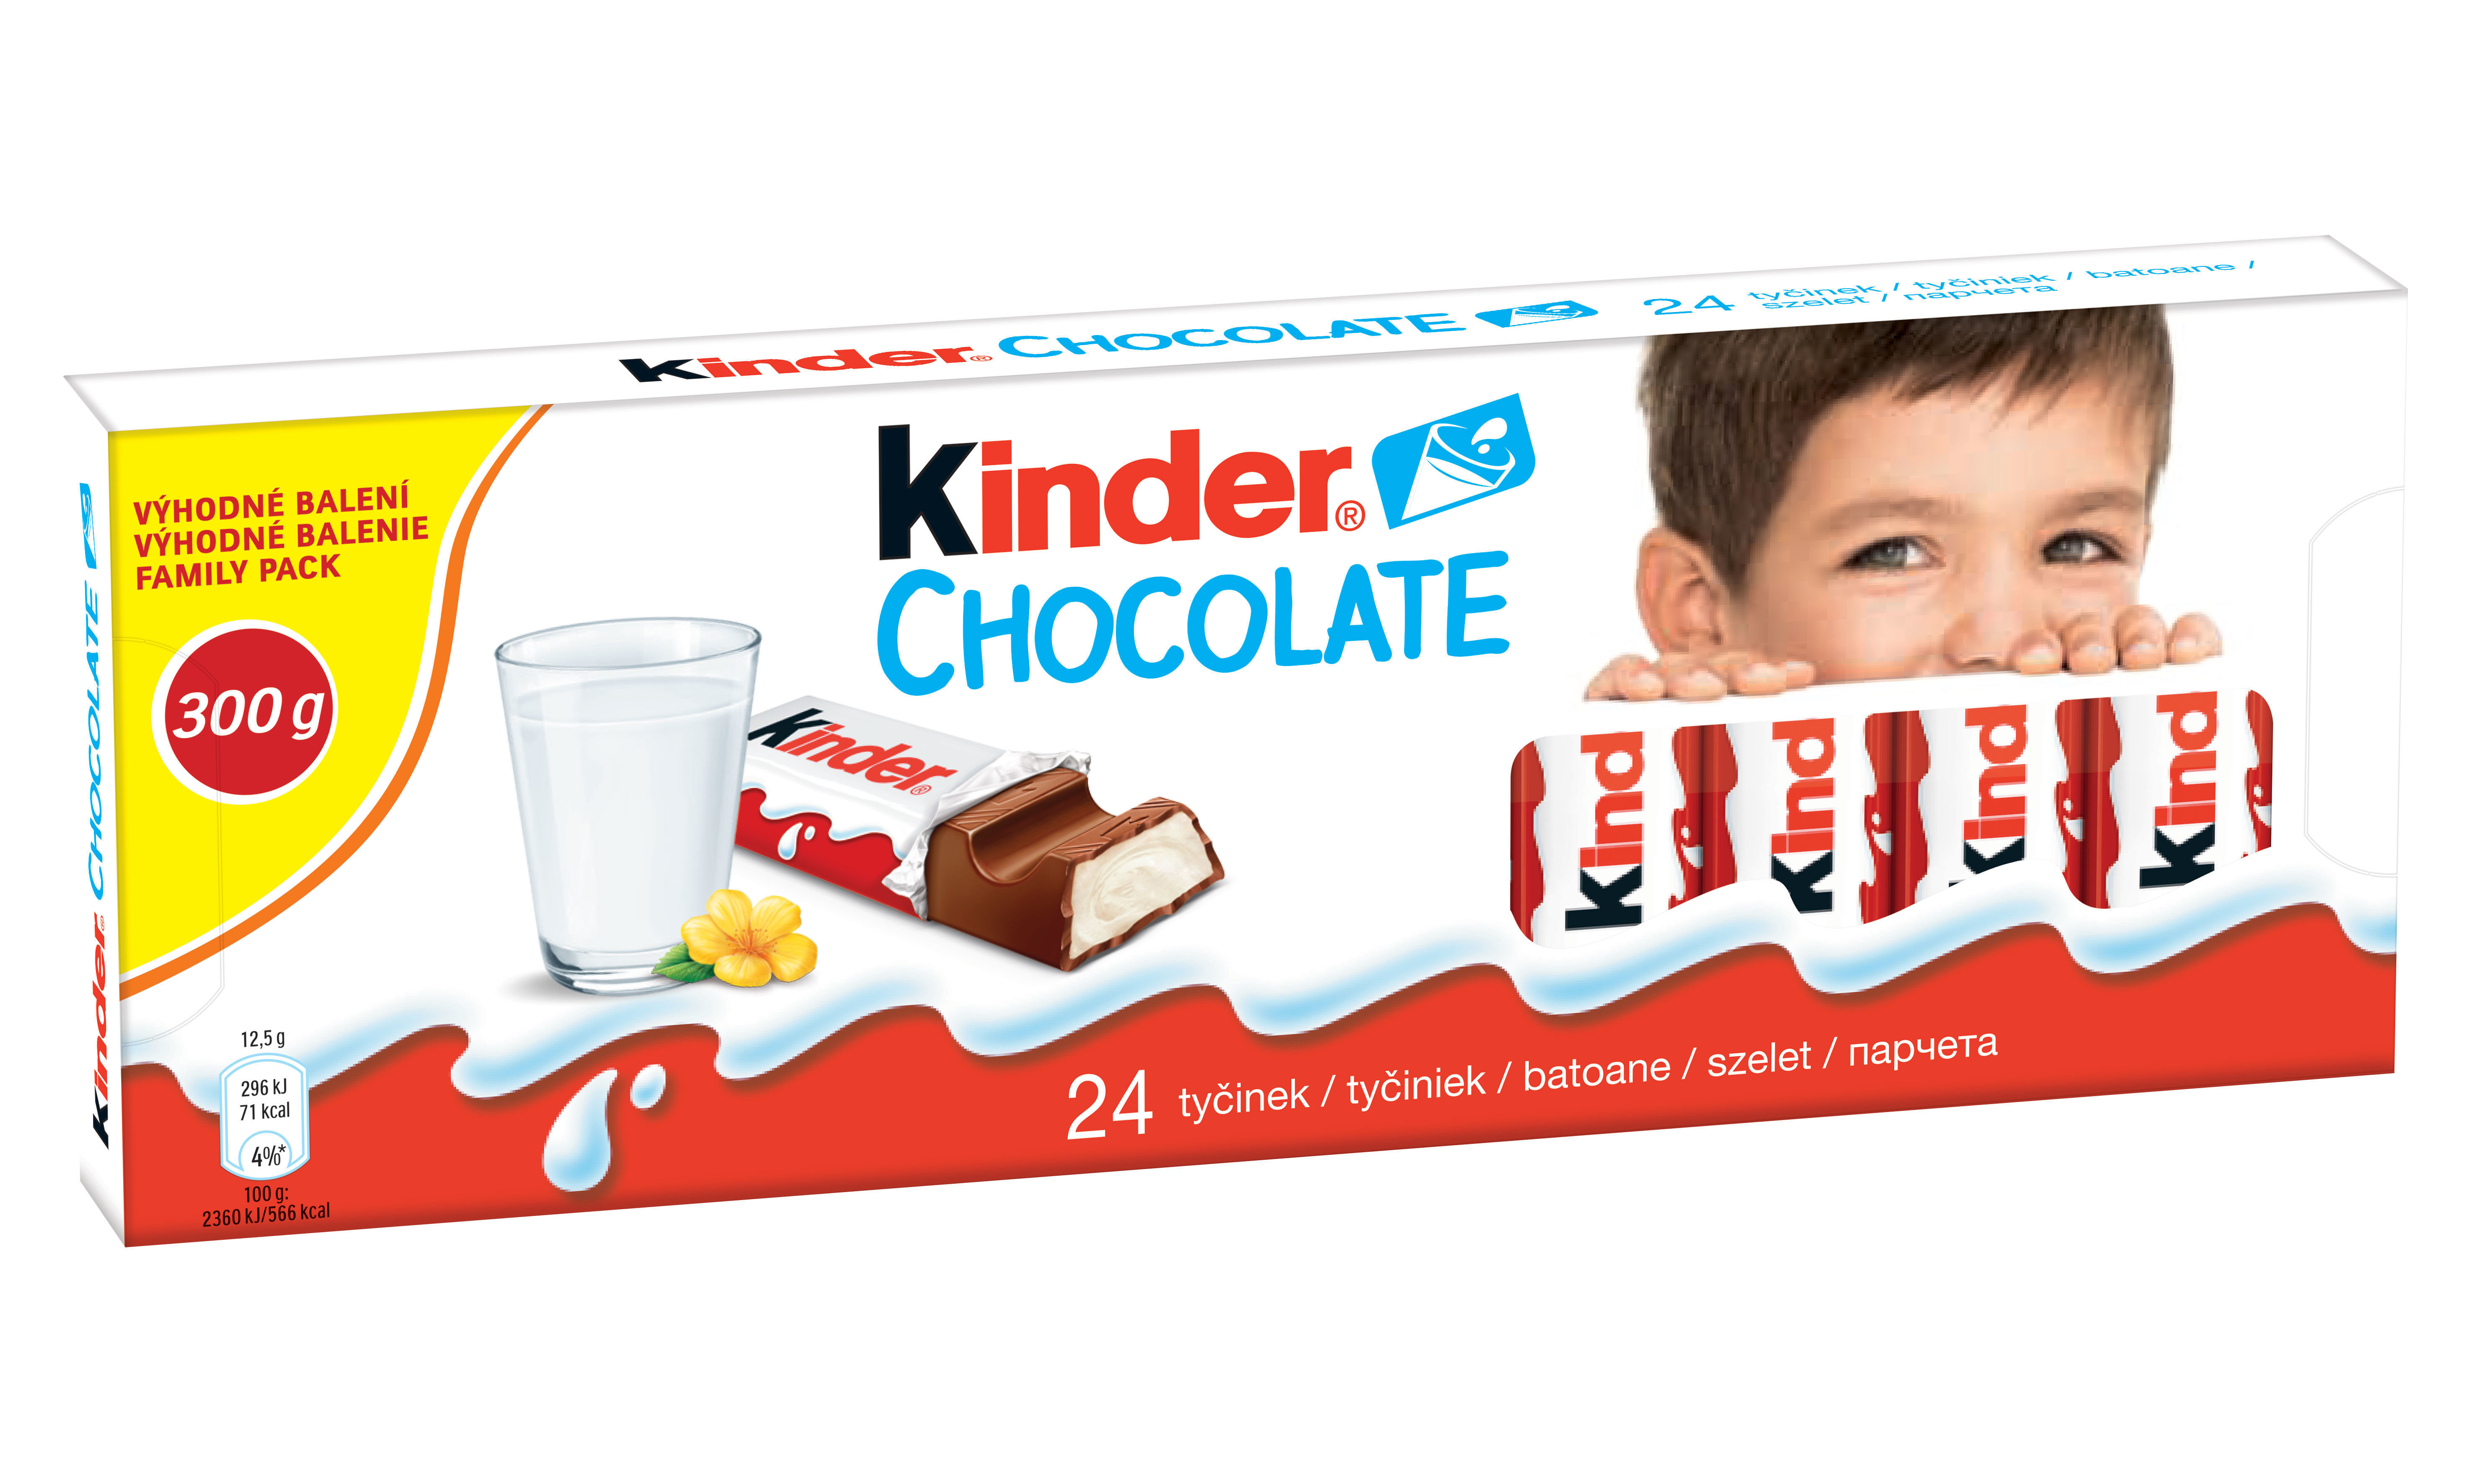 Киндеры 24. Киндер шоколад. Шоколадка Киндер. Kinder шоколад. Киндер 24 шт.